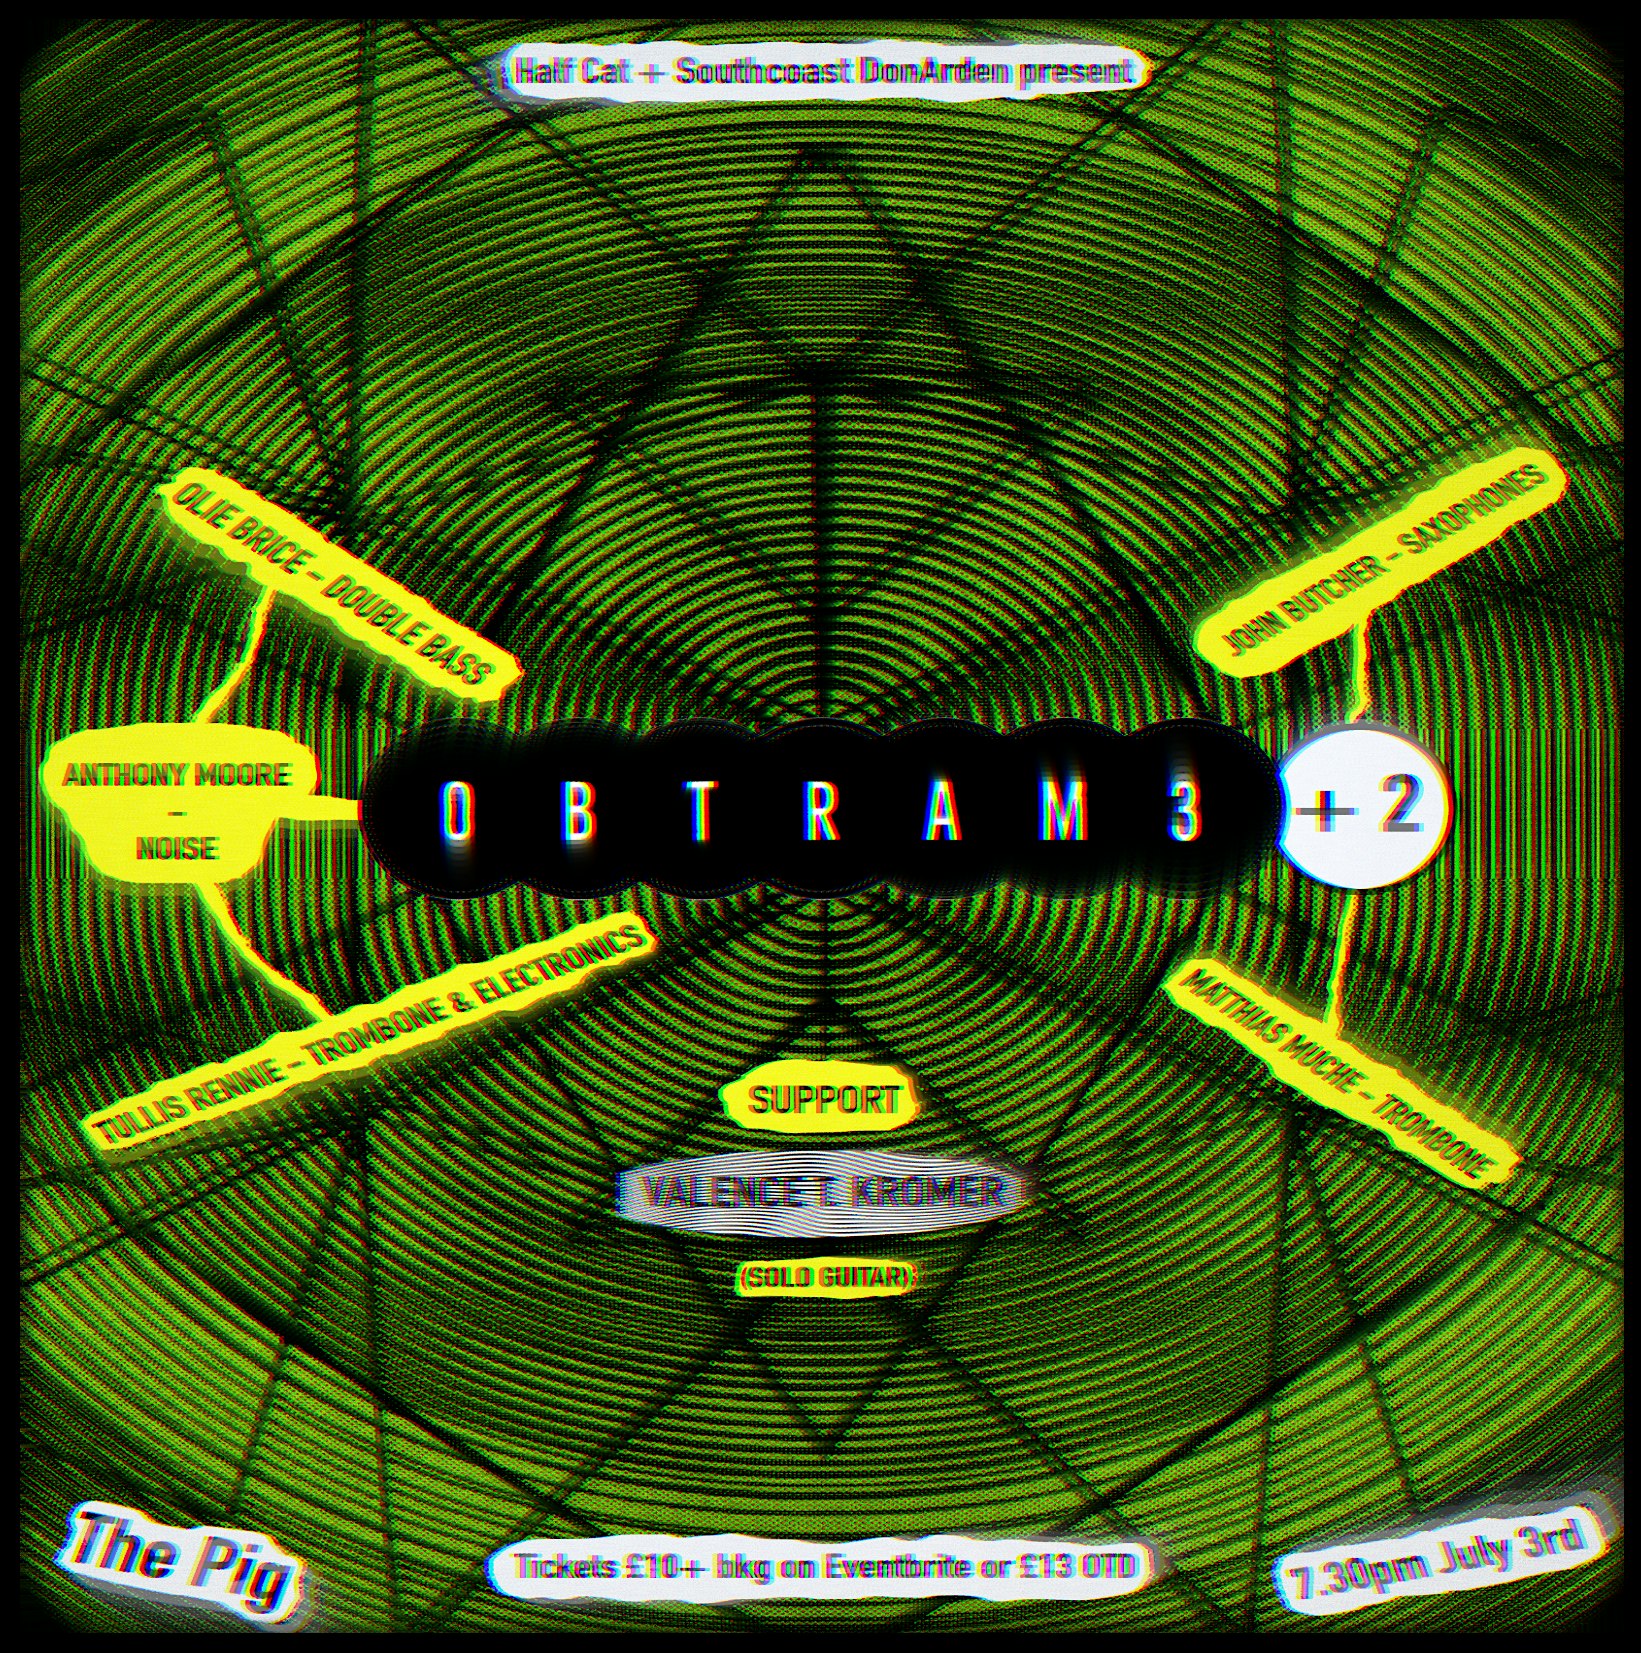 OBTRAM3 + 2